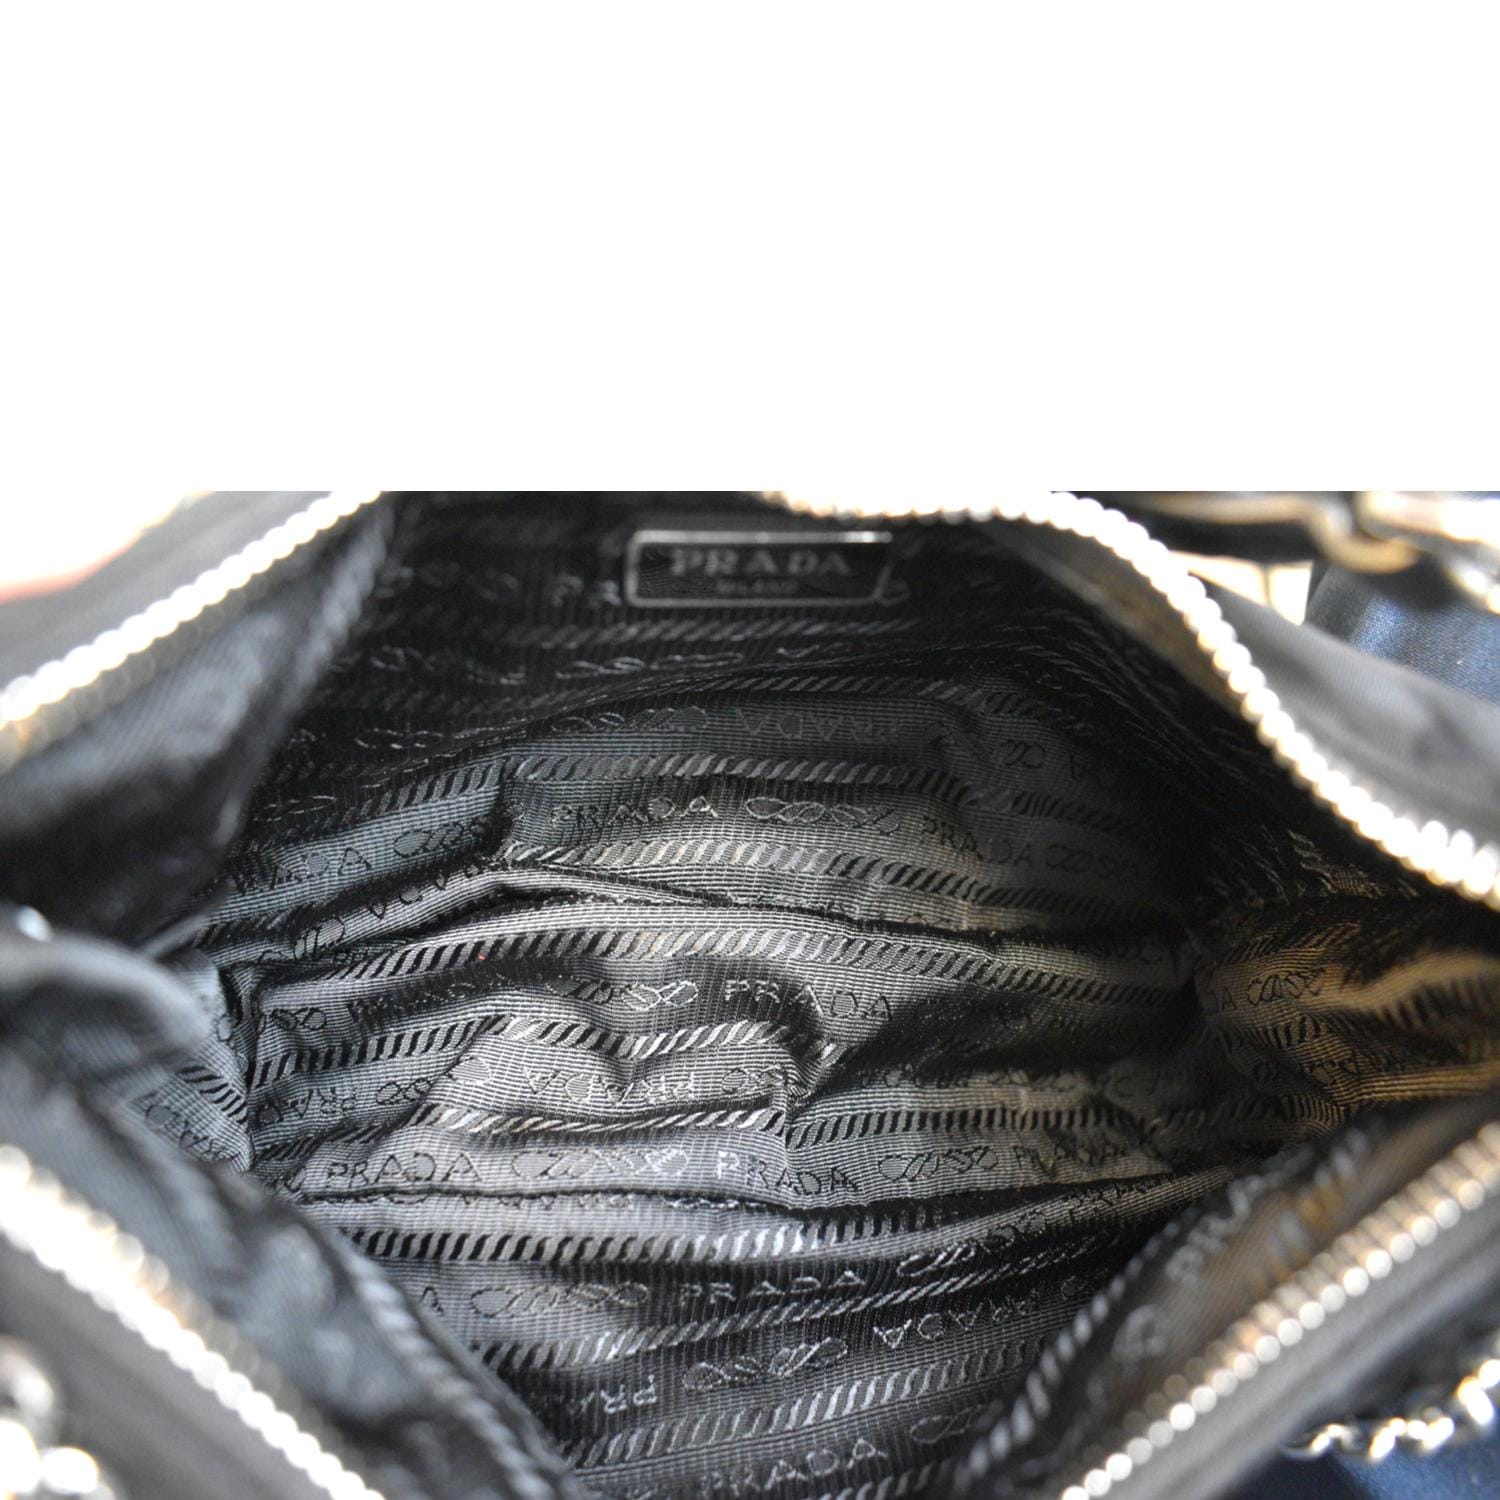 Prada Re-Edition 2005 Shoulder Bag Nylon Black in Nylon/Saffiano